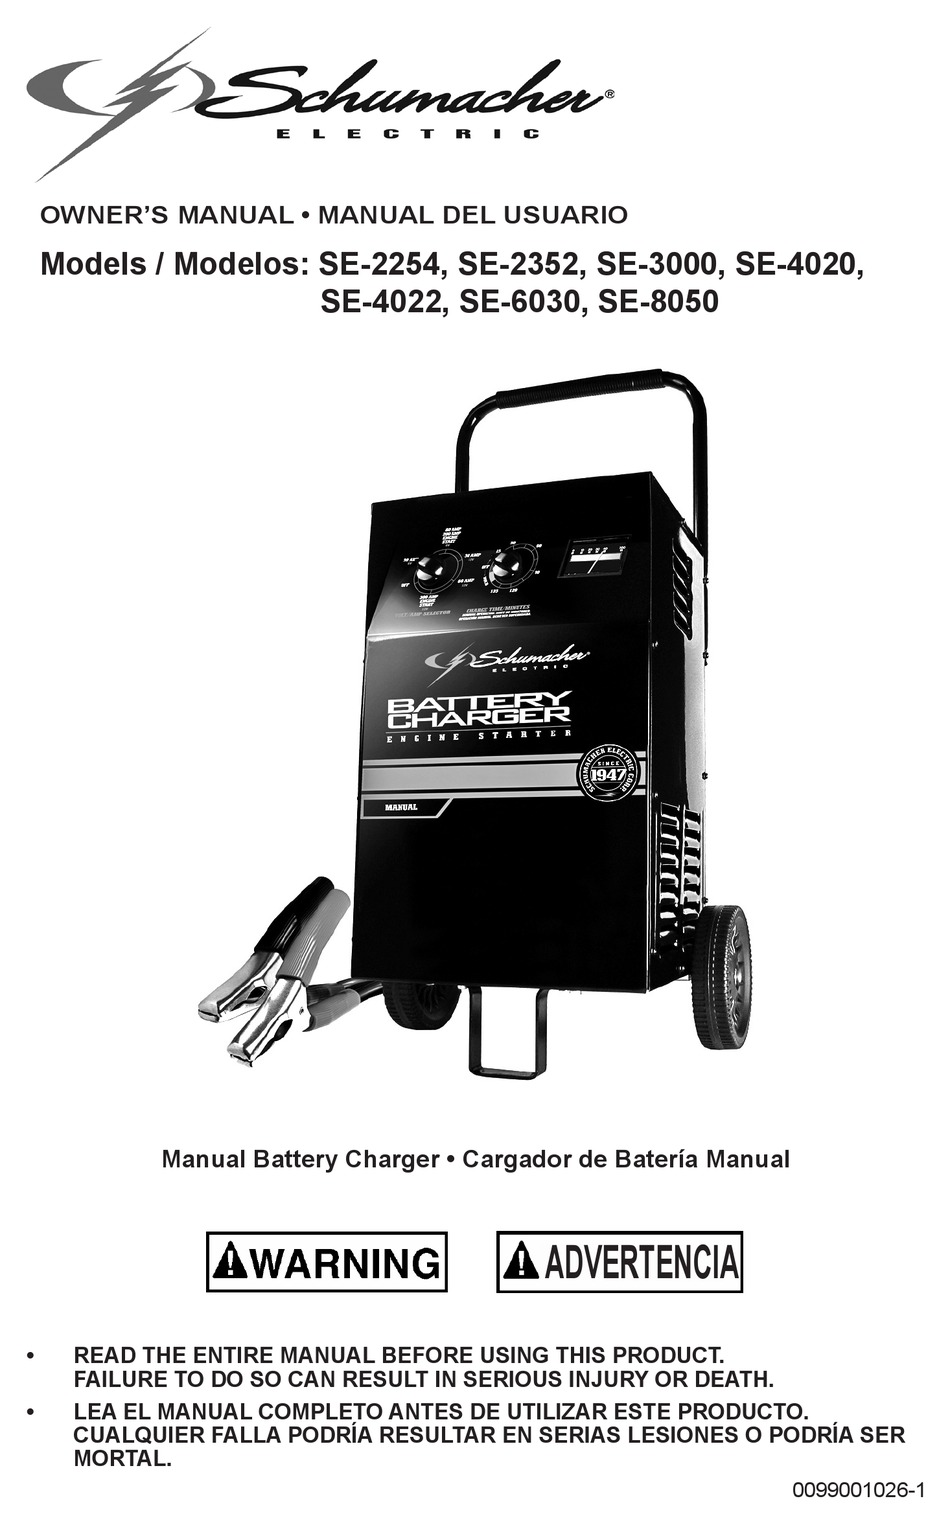 SCHUMACHER ELECTRIC SE-2254 OWNER'S MANUAL Pdf Download | ManualsLib